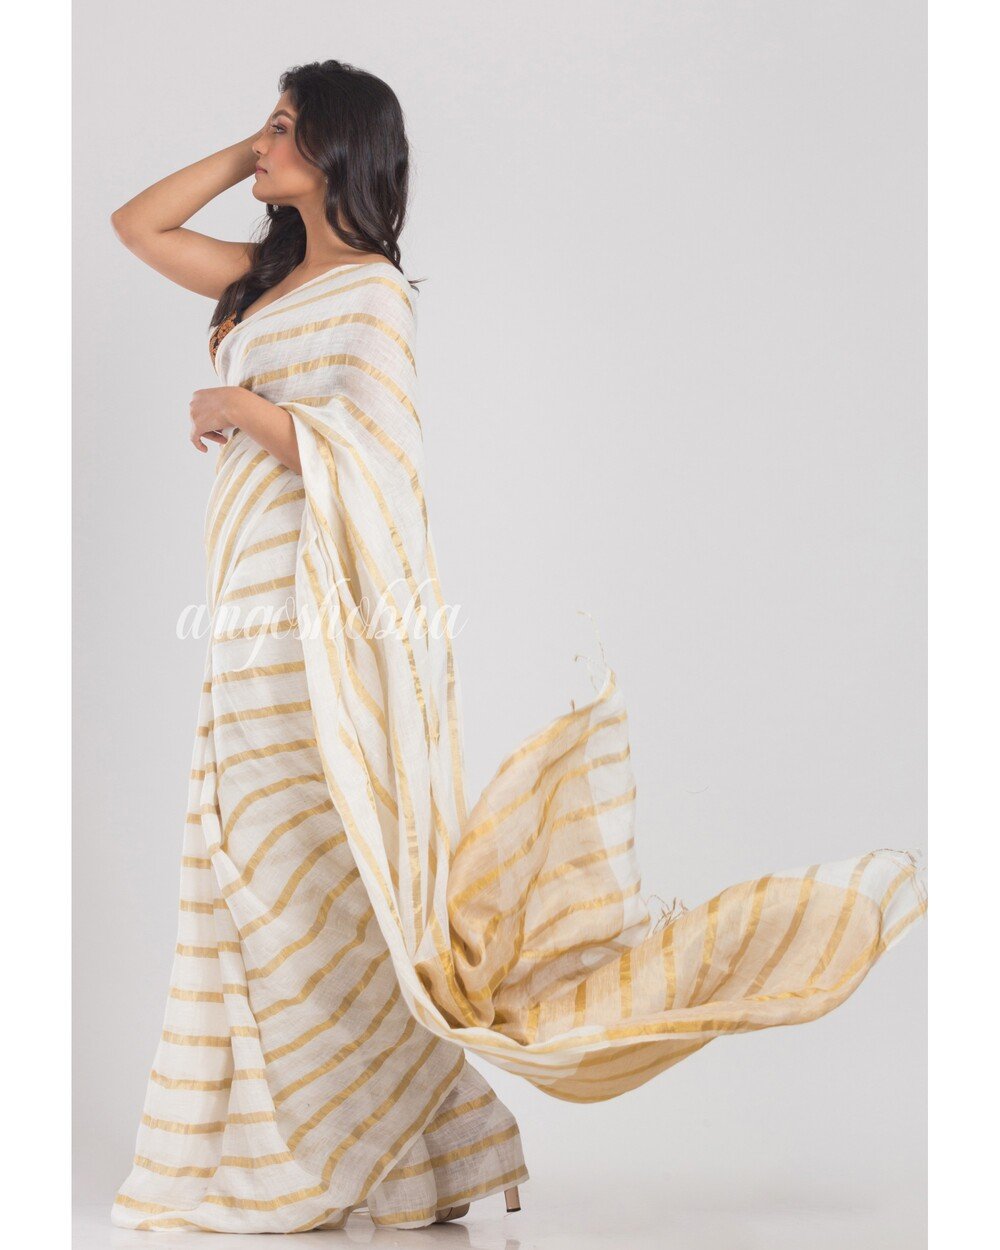 Women's White Handloom Linen Saree - Angoshobha